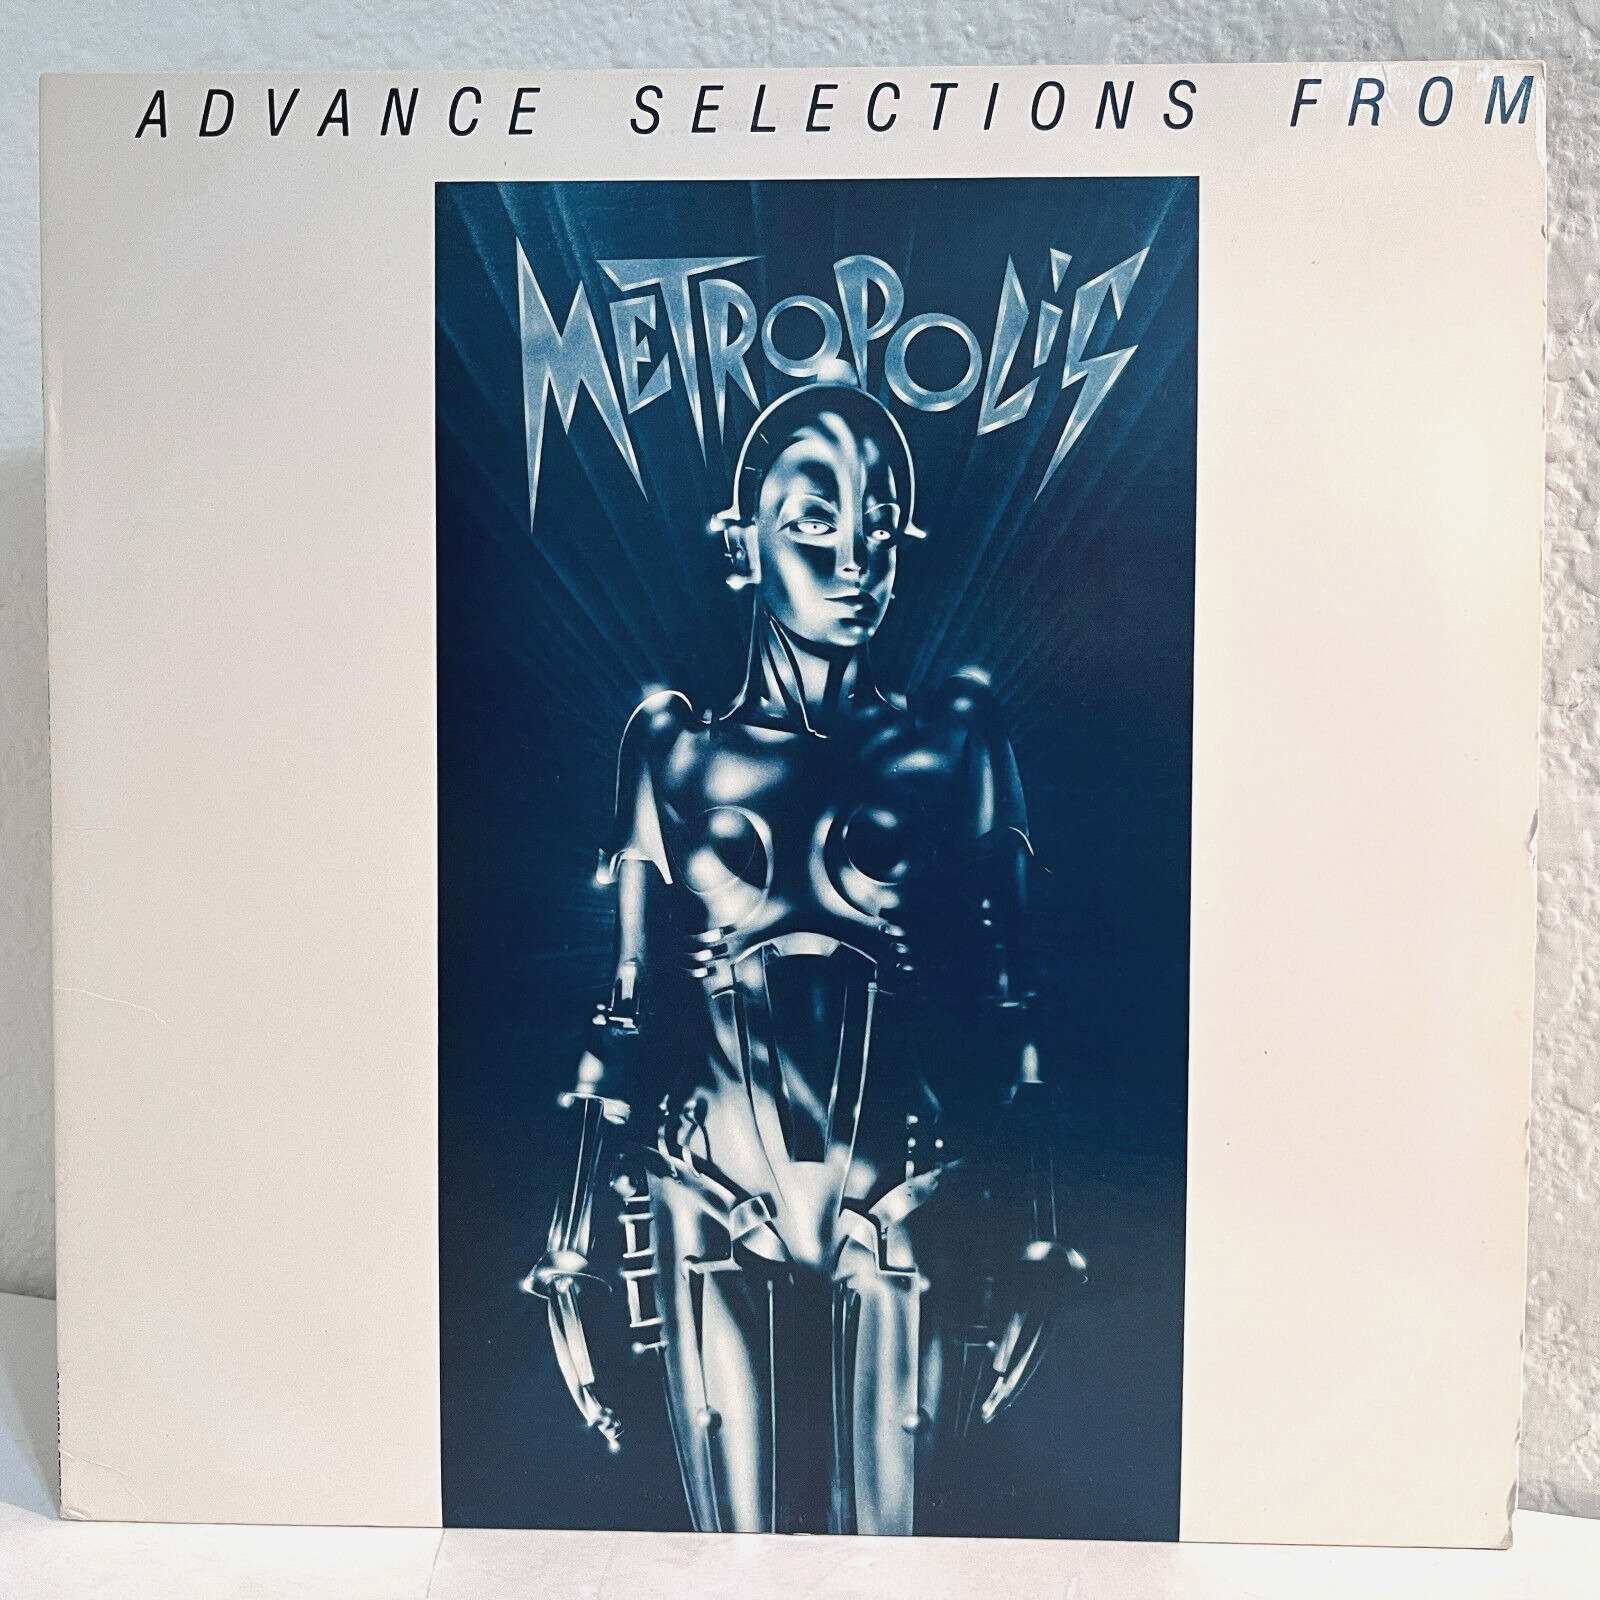 METROPOLIS Movie Promo (Bonnie Tyler/Jon Anderson) 12" Vinyl Record Single - EX